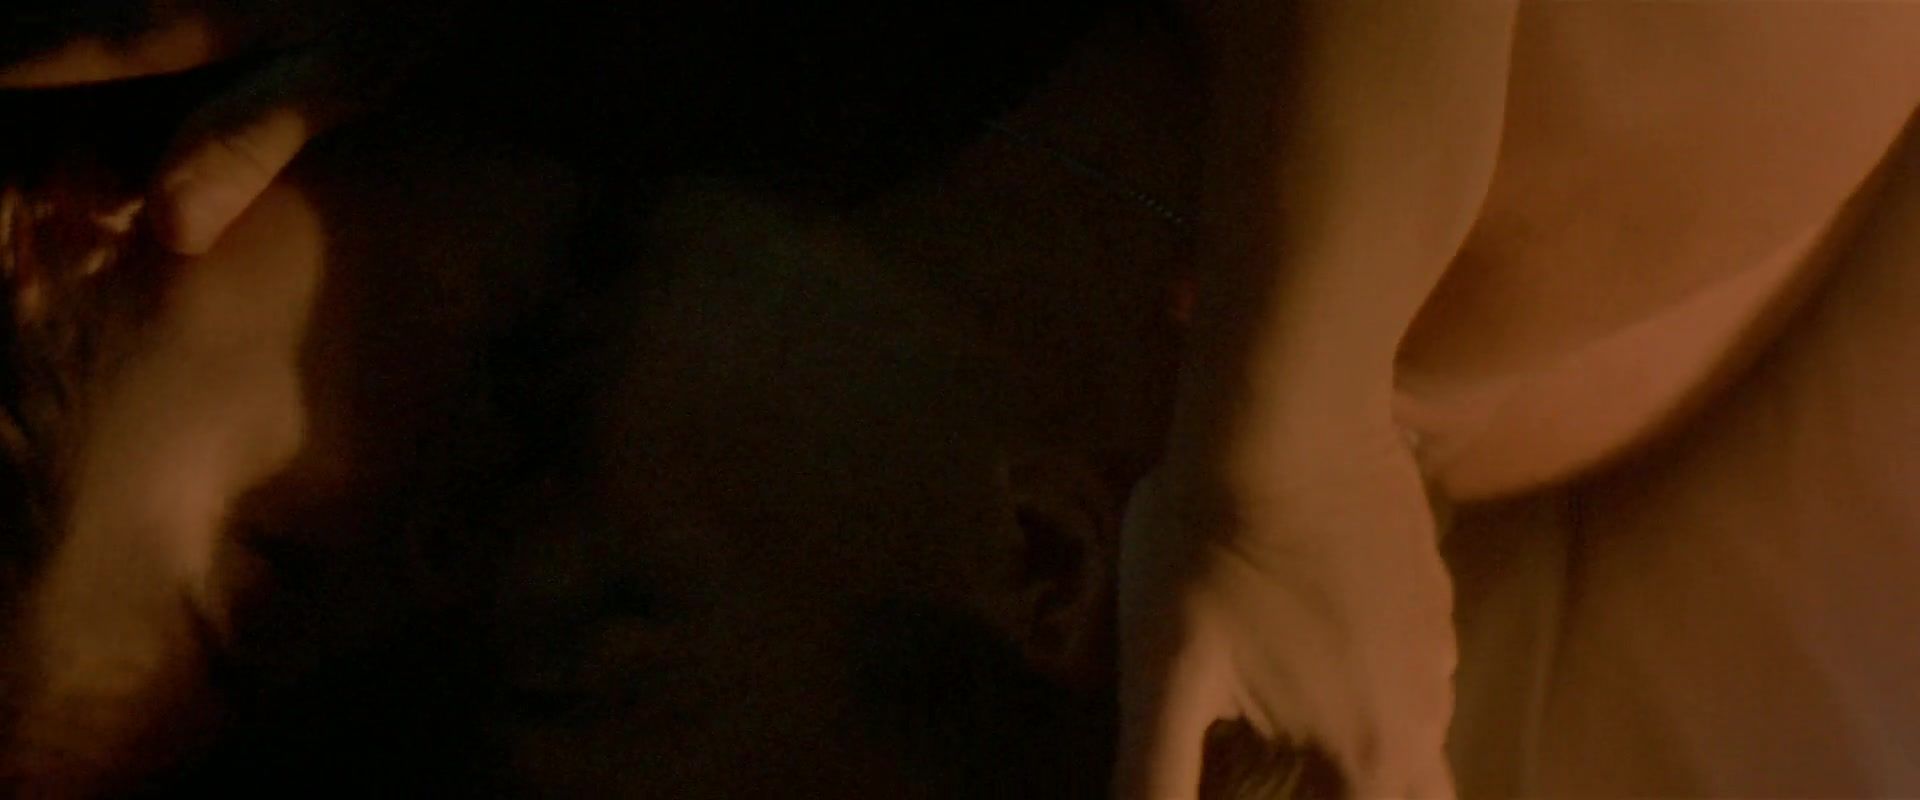 Soles Hot Scene with actress Madeleine Stowe | The movie "Revenge" BestSexWebcam - 1